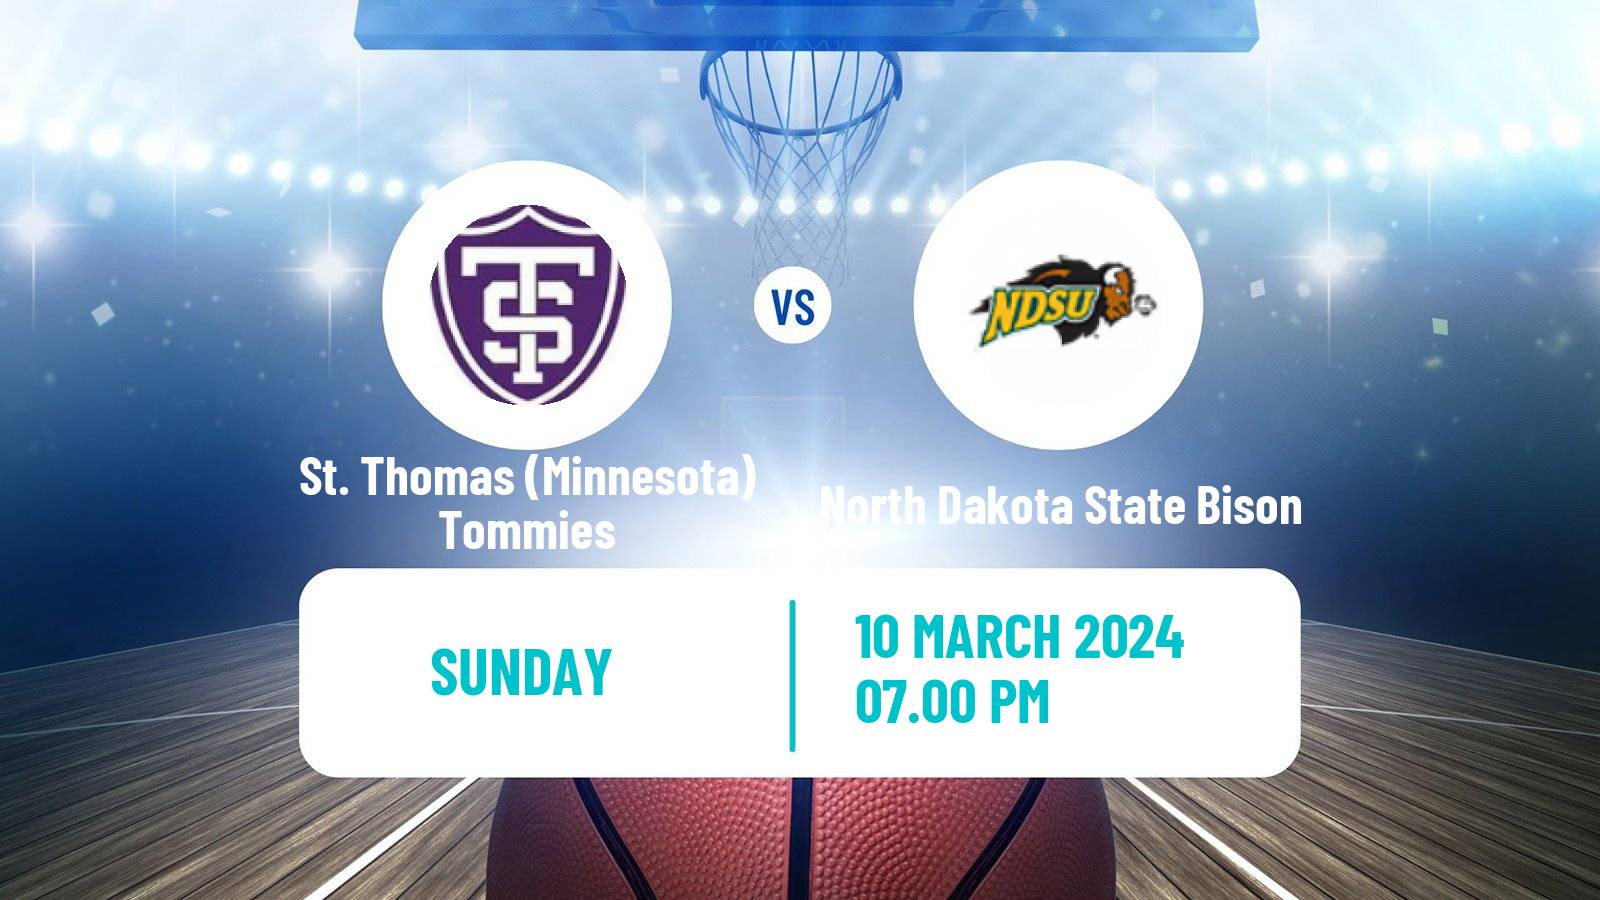 Basketball NCAA College Basketball St. Thomas (Minnesota) Tommies - North Dakota State Bison